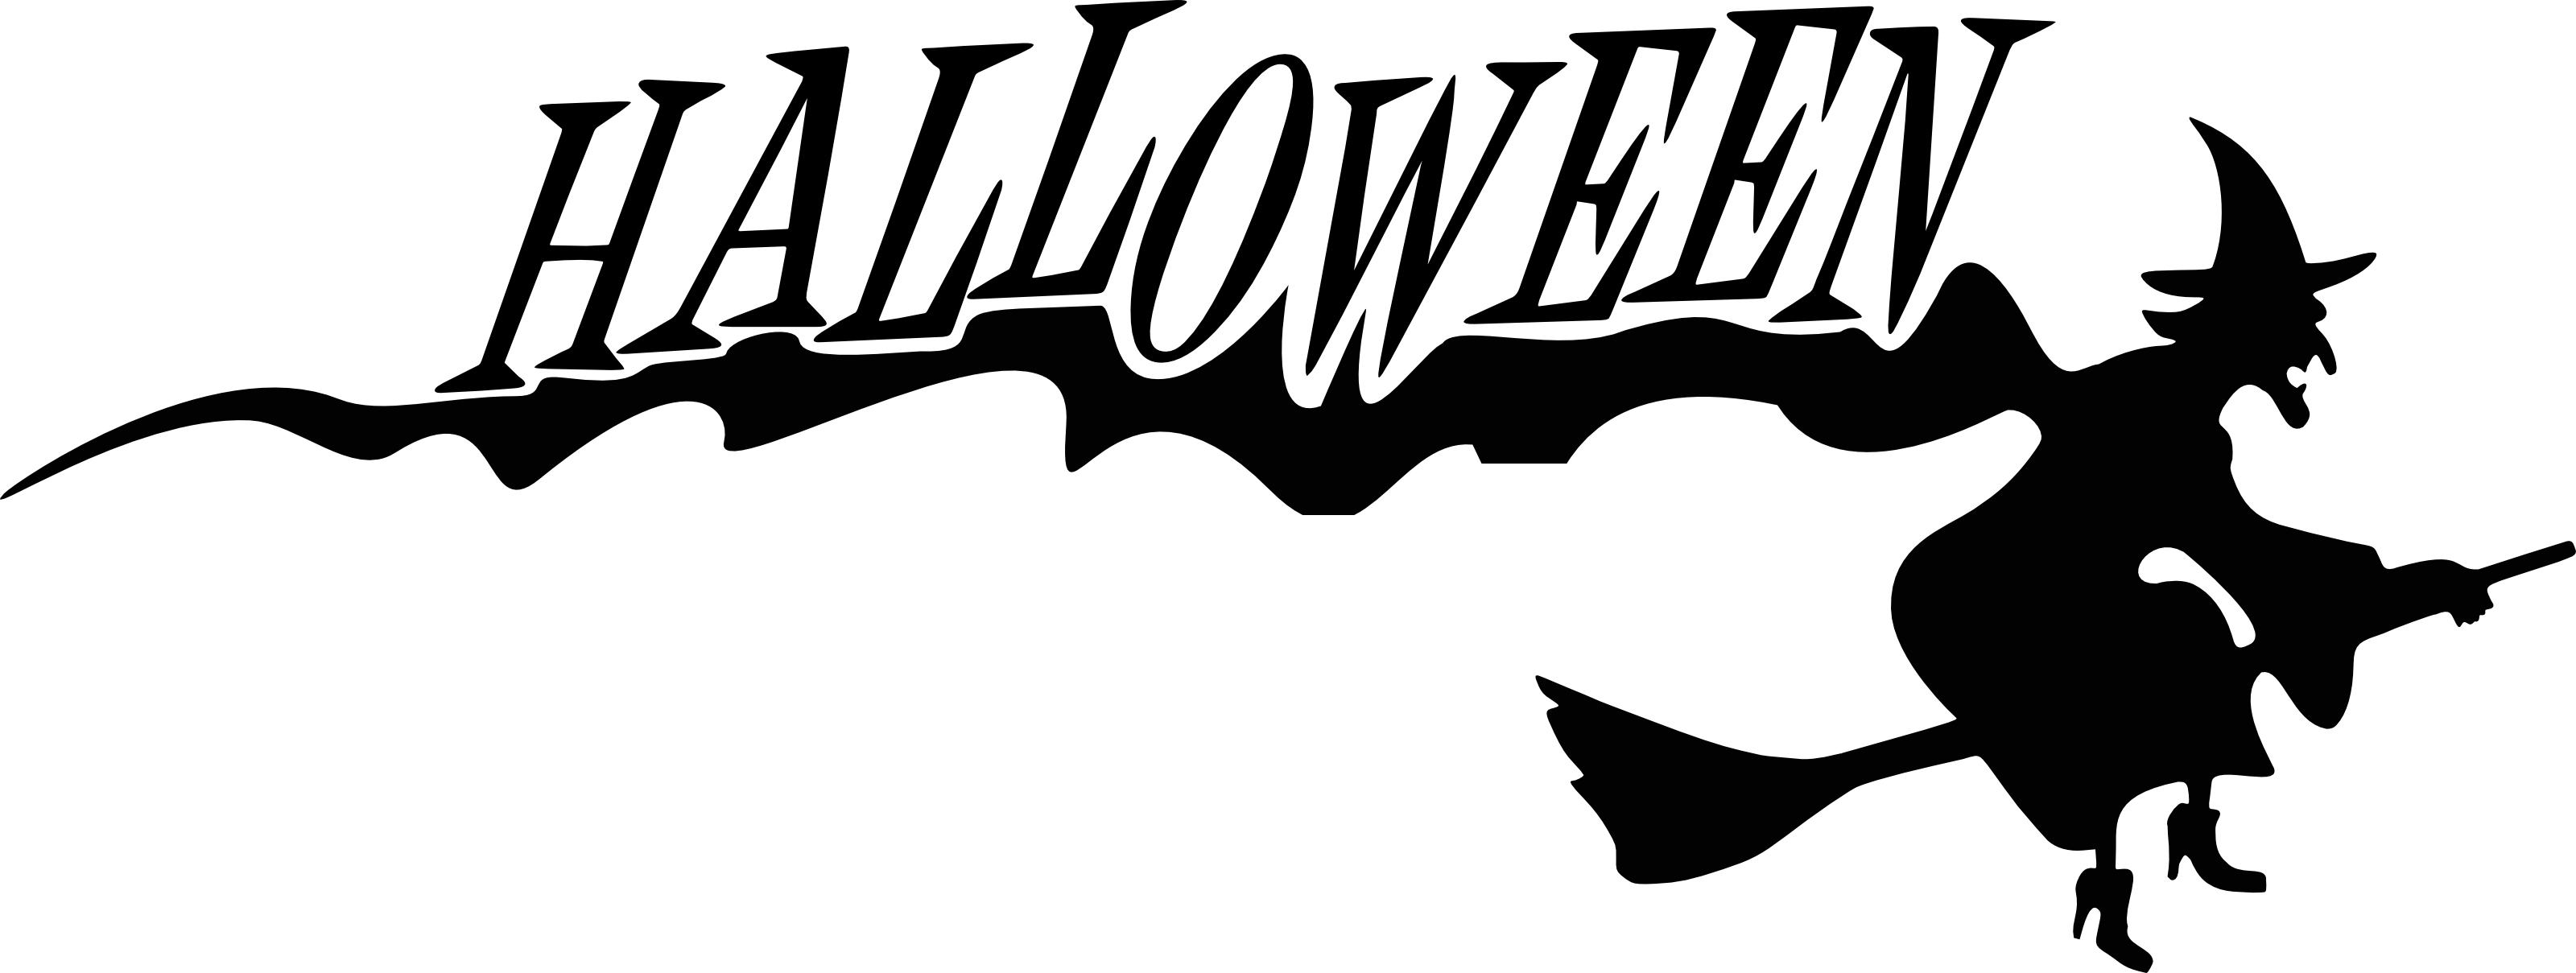 free halloween silhouette clipart - photo #38